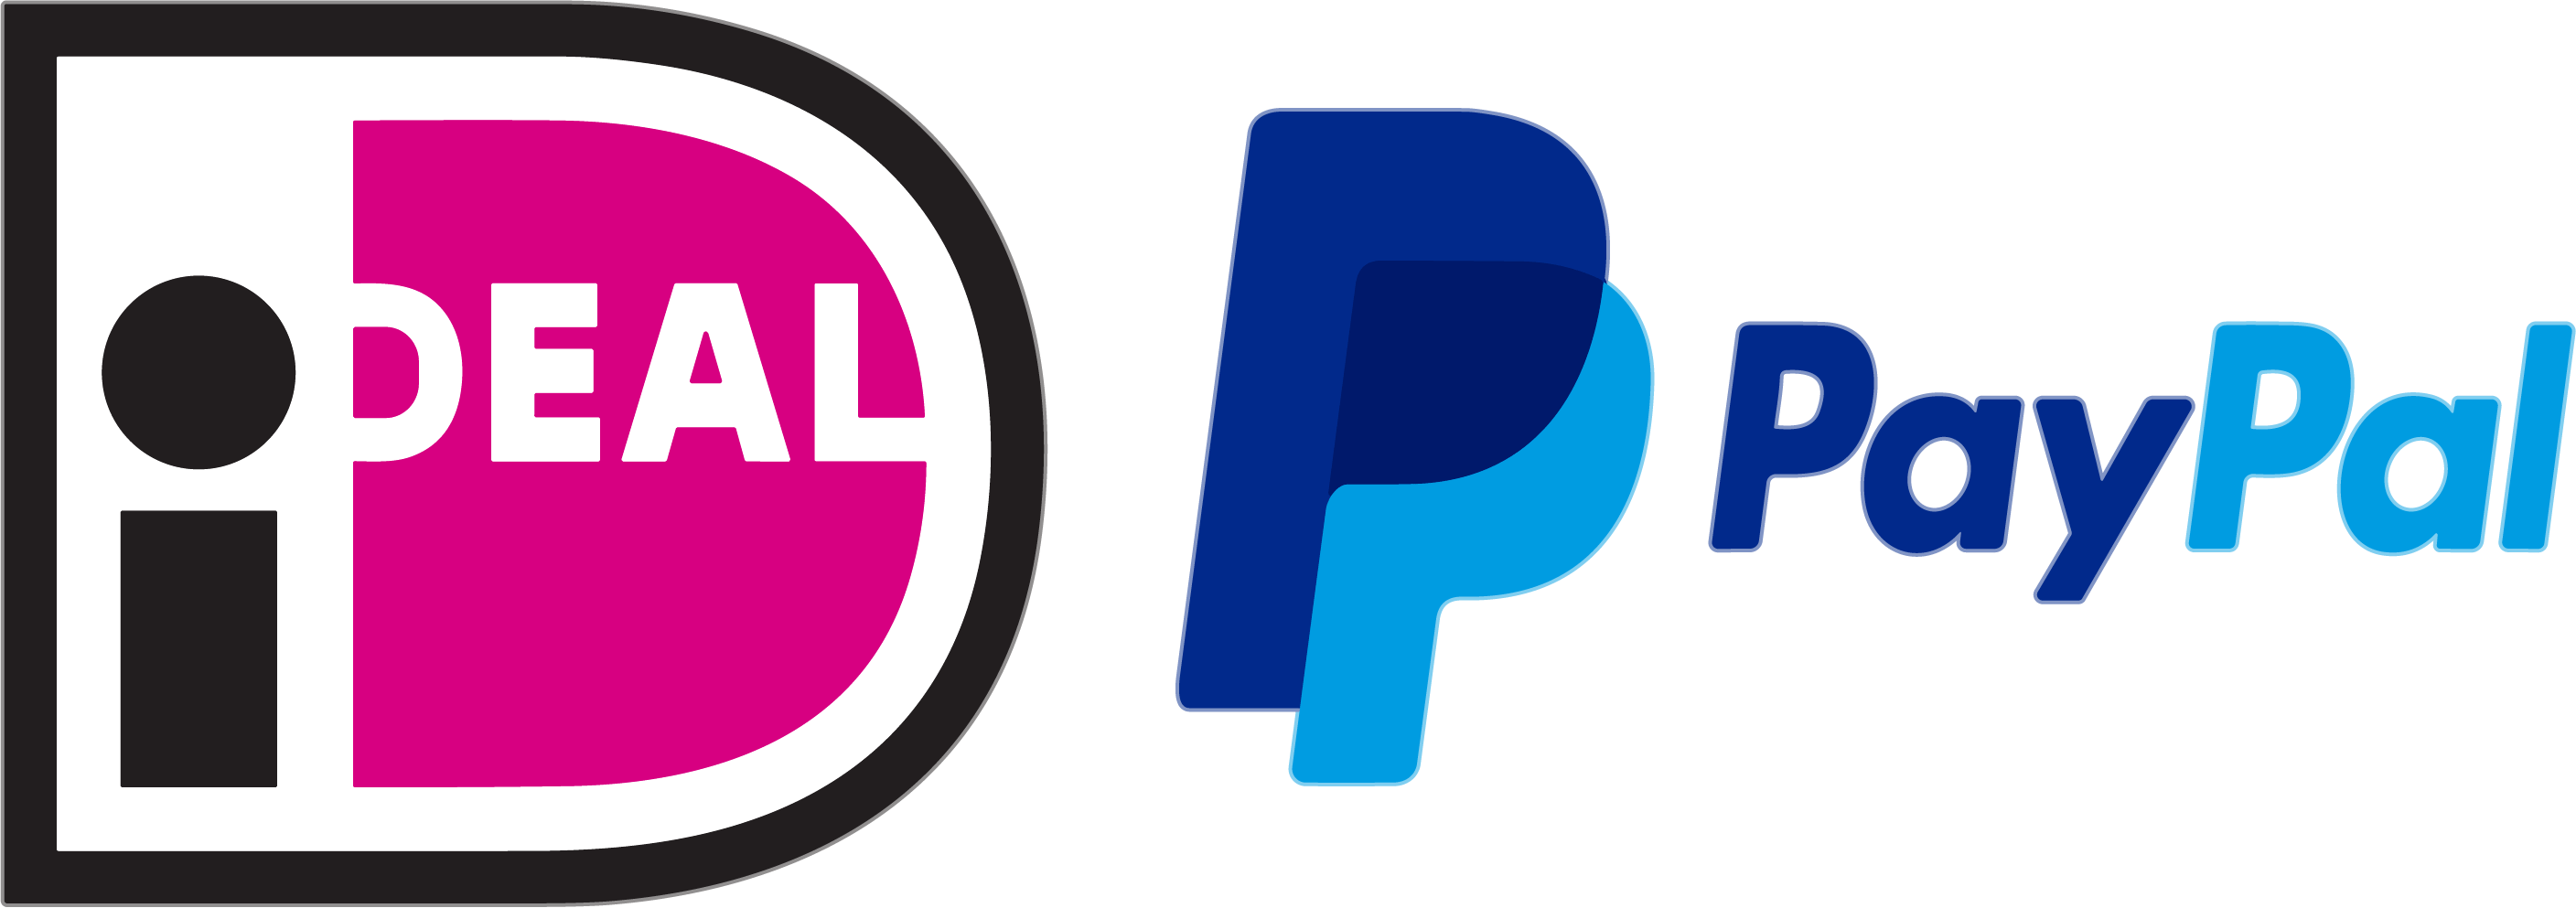 Ideal en PayPal logo